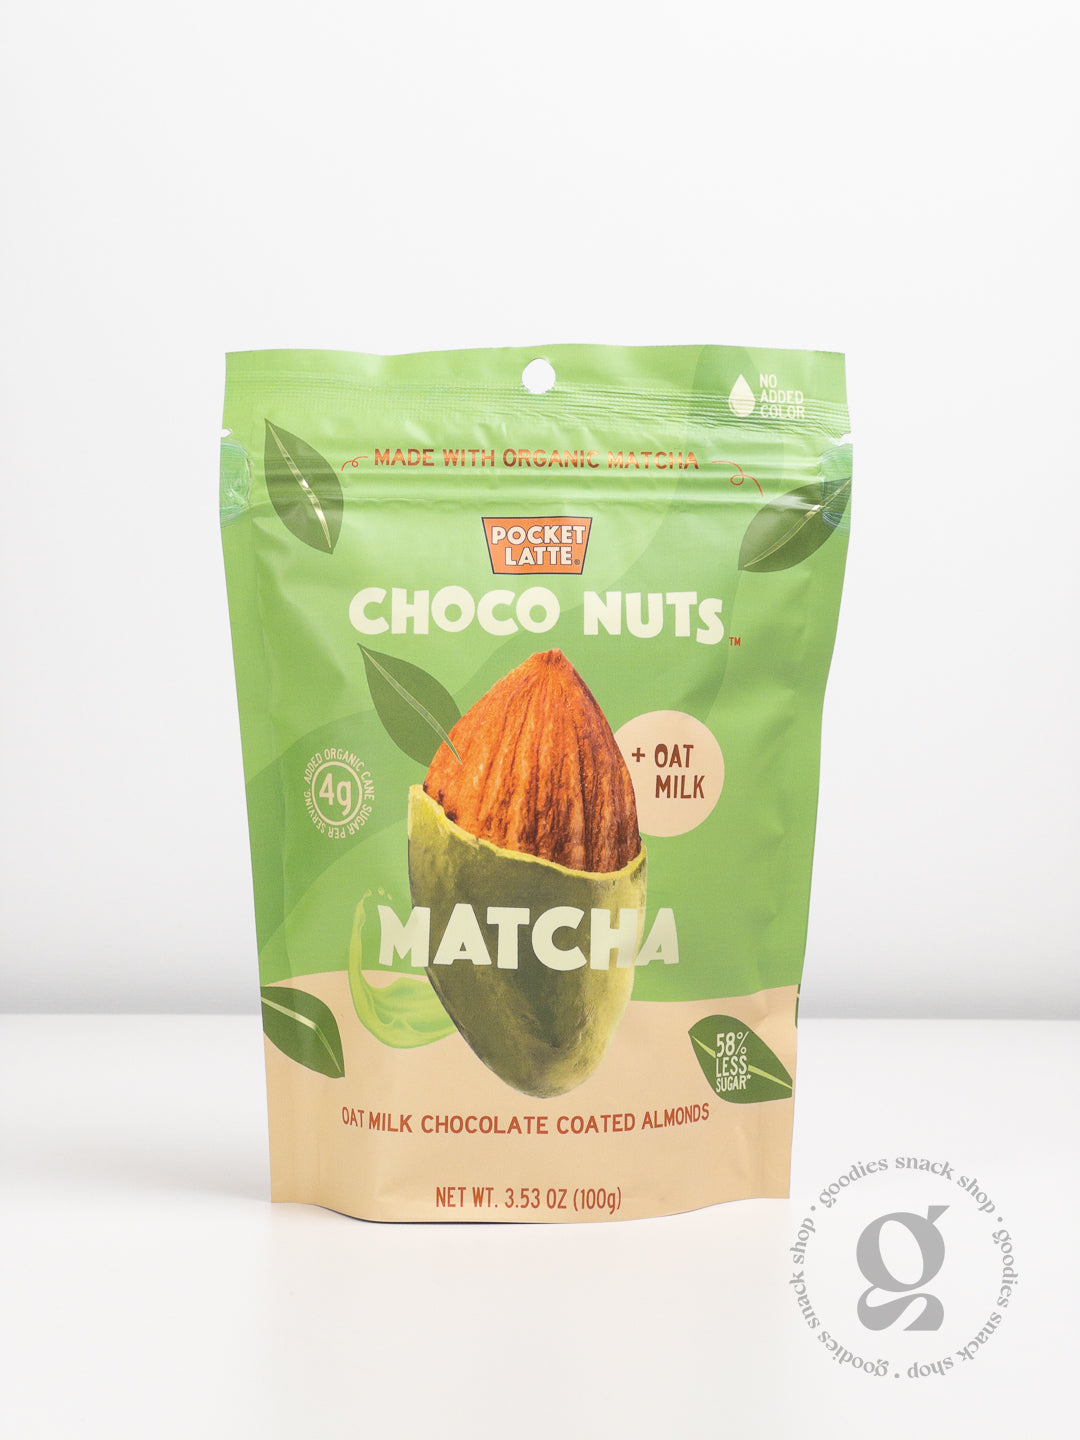 Pocket Latte - Matcha Choco Nuts